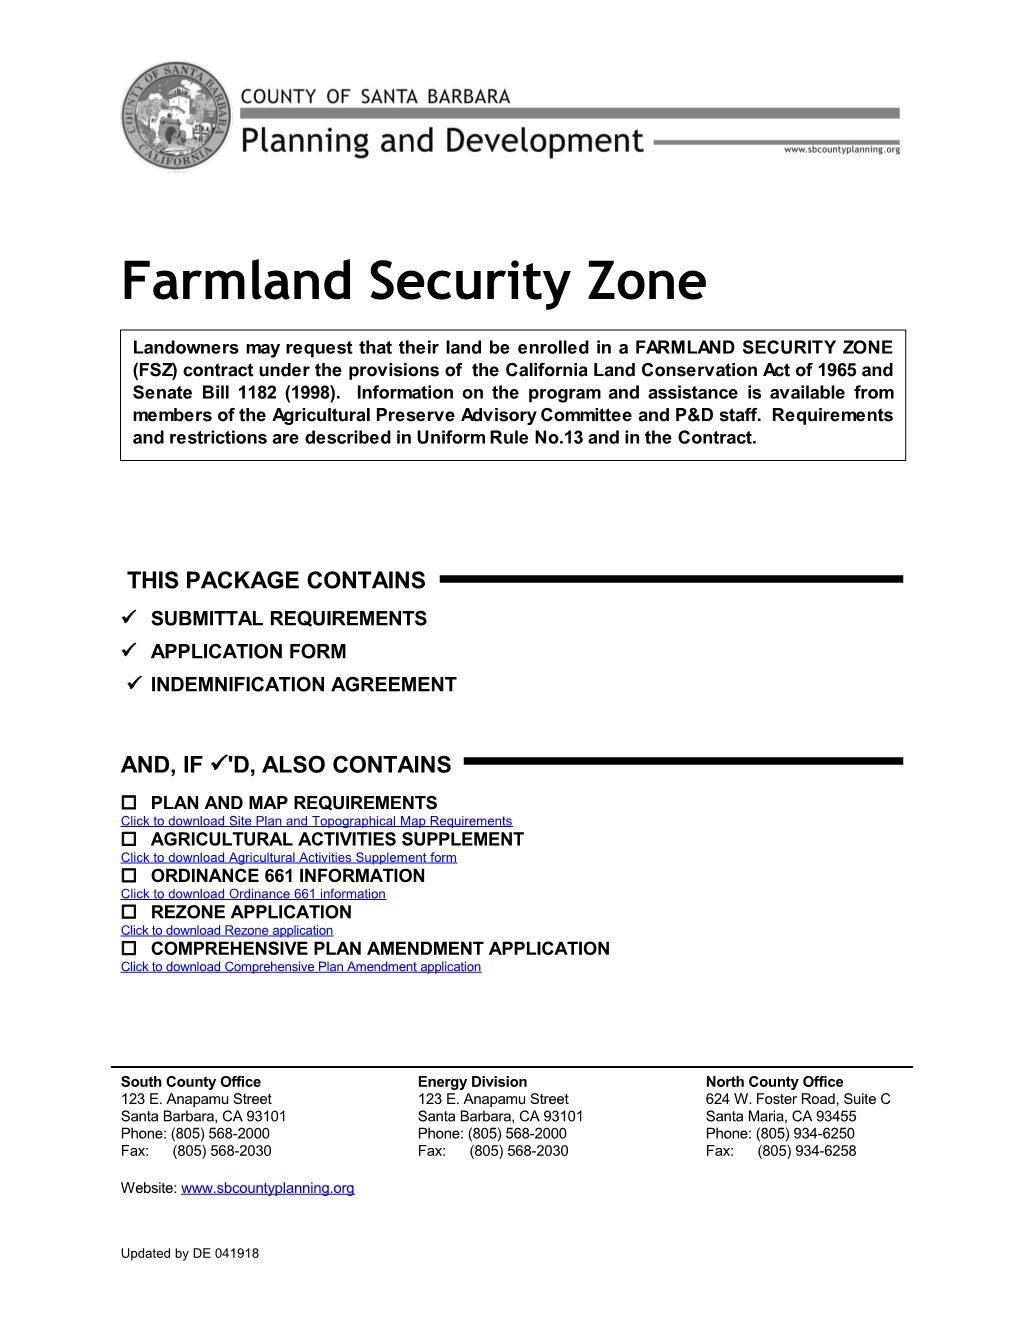 Farmland Security Zone Contract